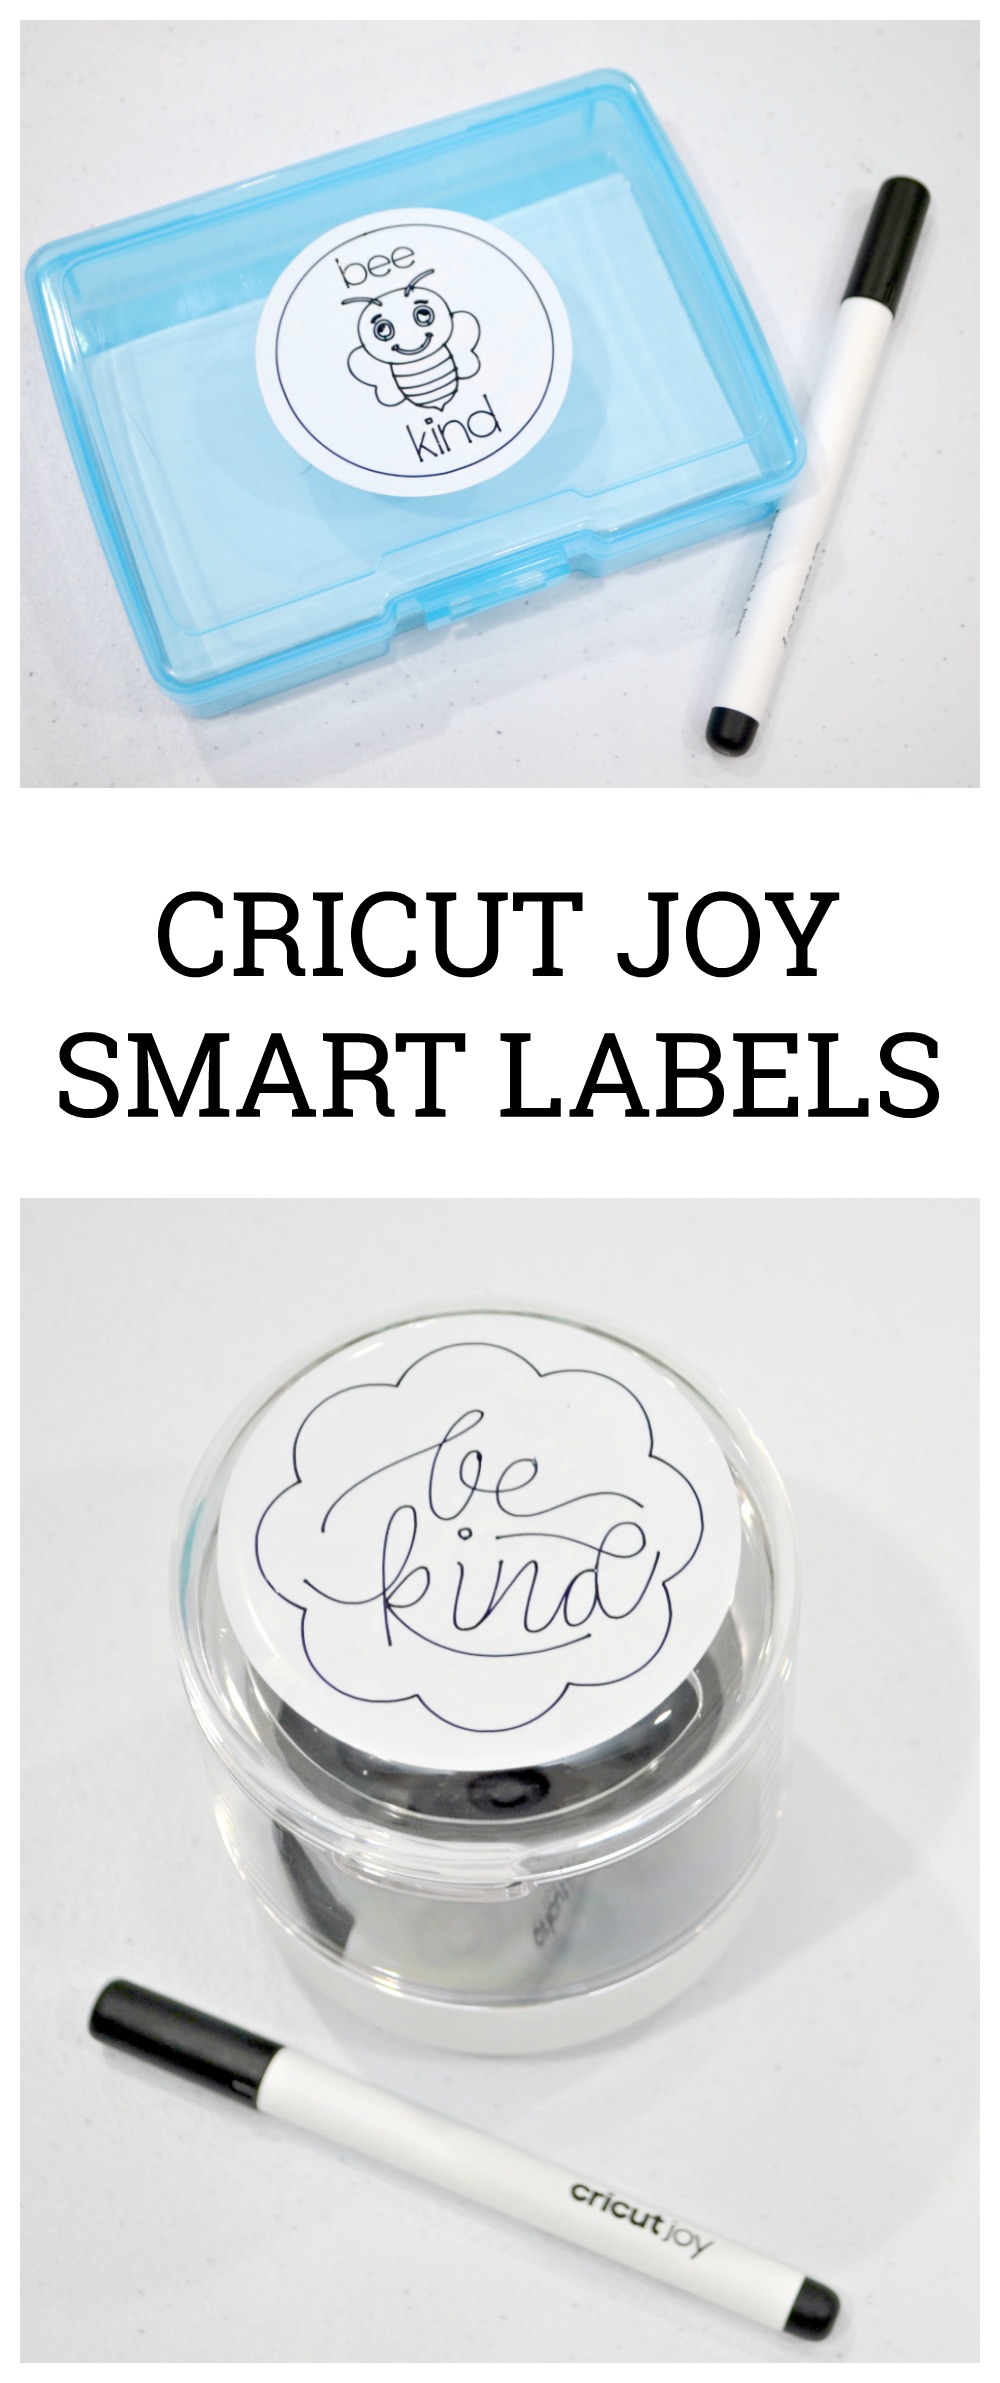 Cricut Joy Smart Labels